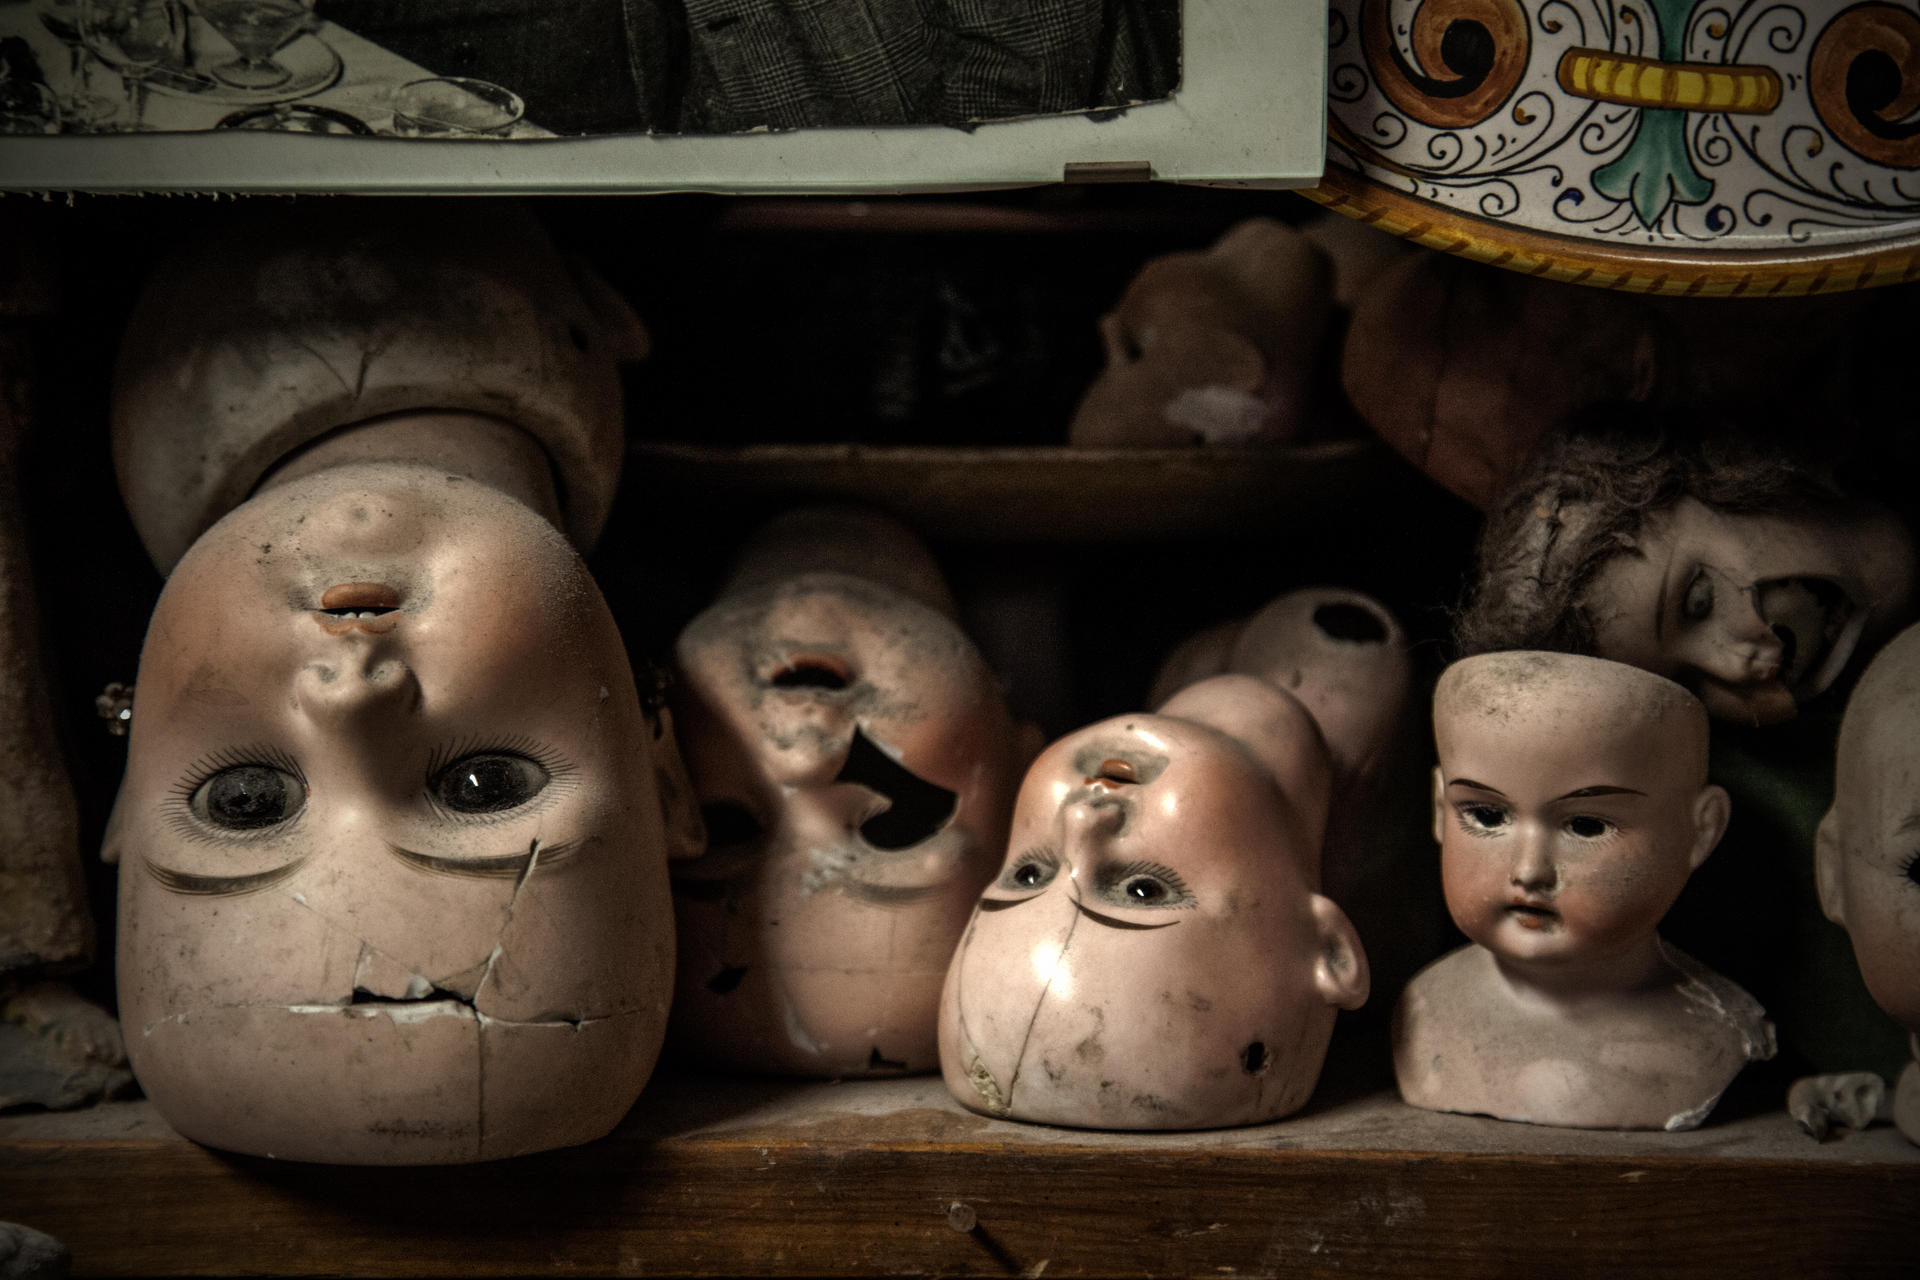 Broken heads of antique dolls line the hospital's shelves.